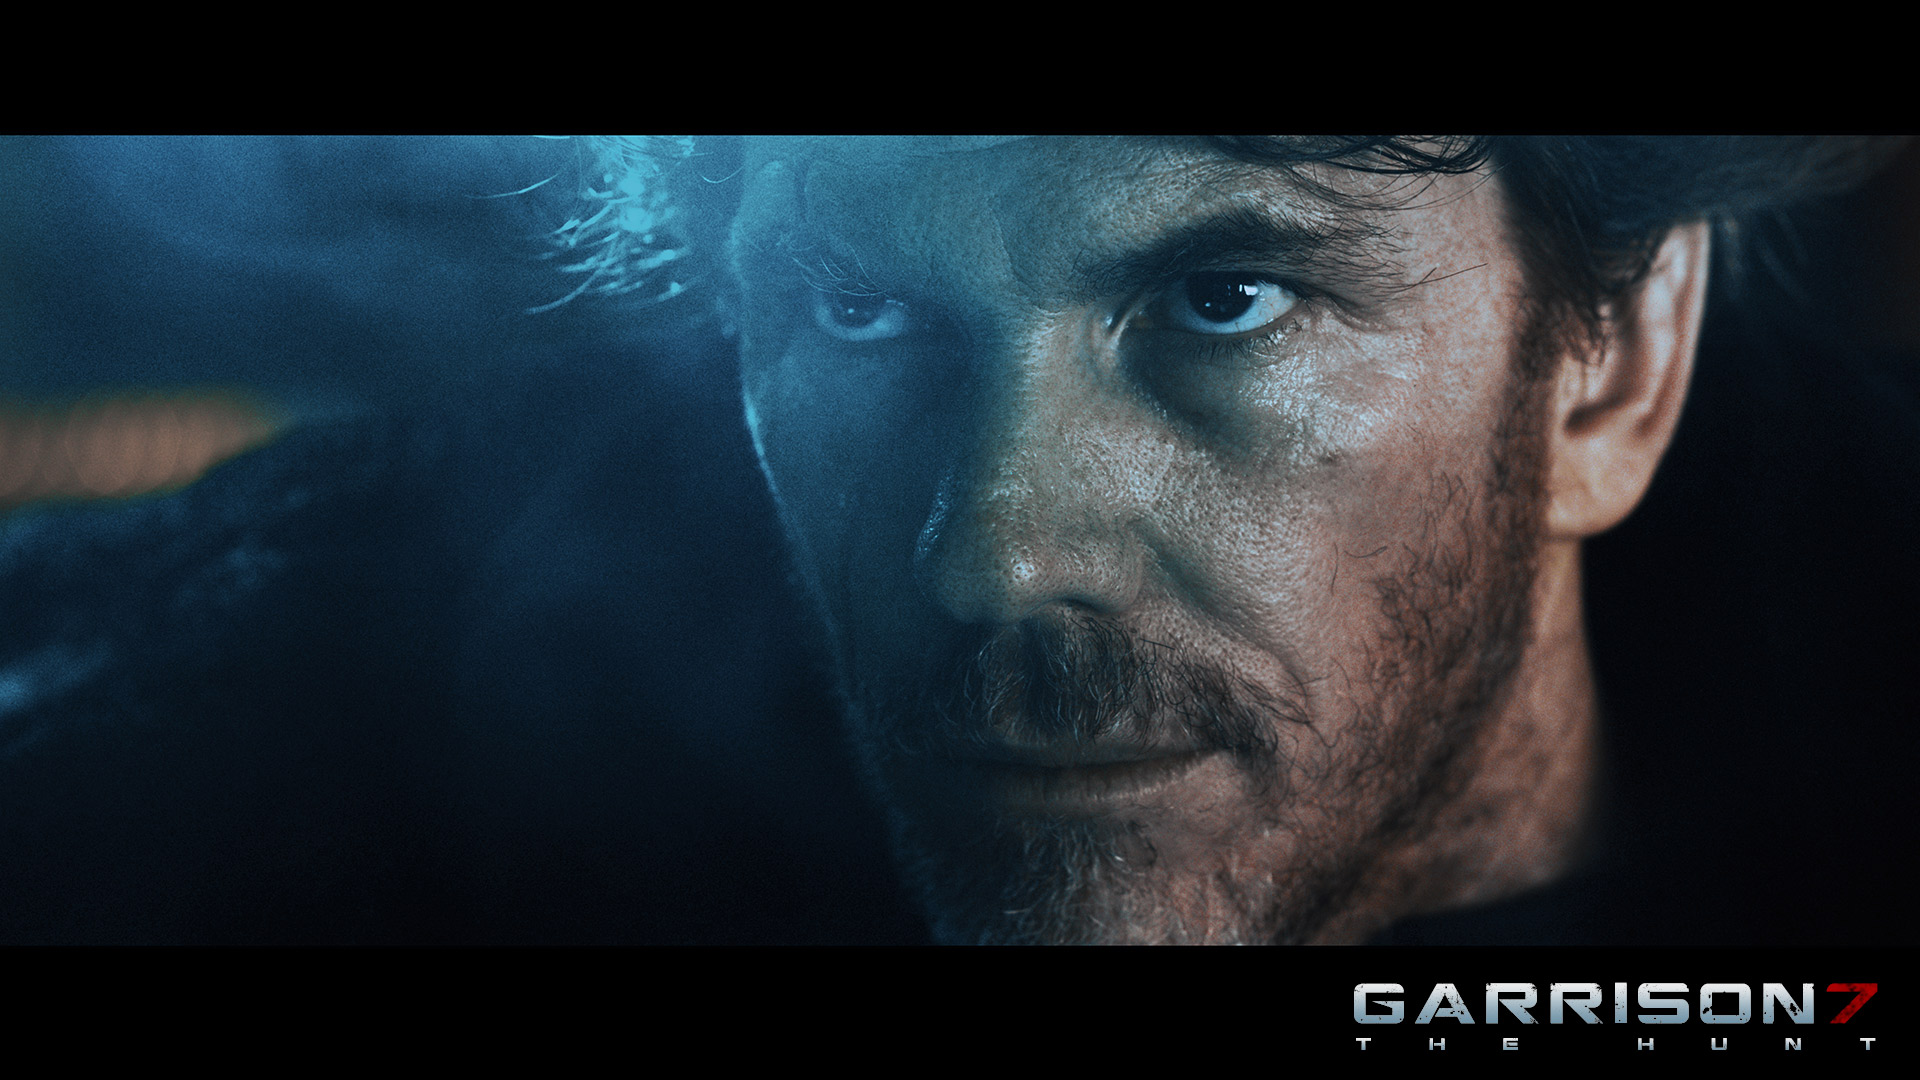 Garrison 7: The Hunt Scott A. Brewer as Tom Garrison